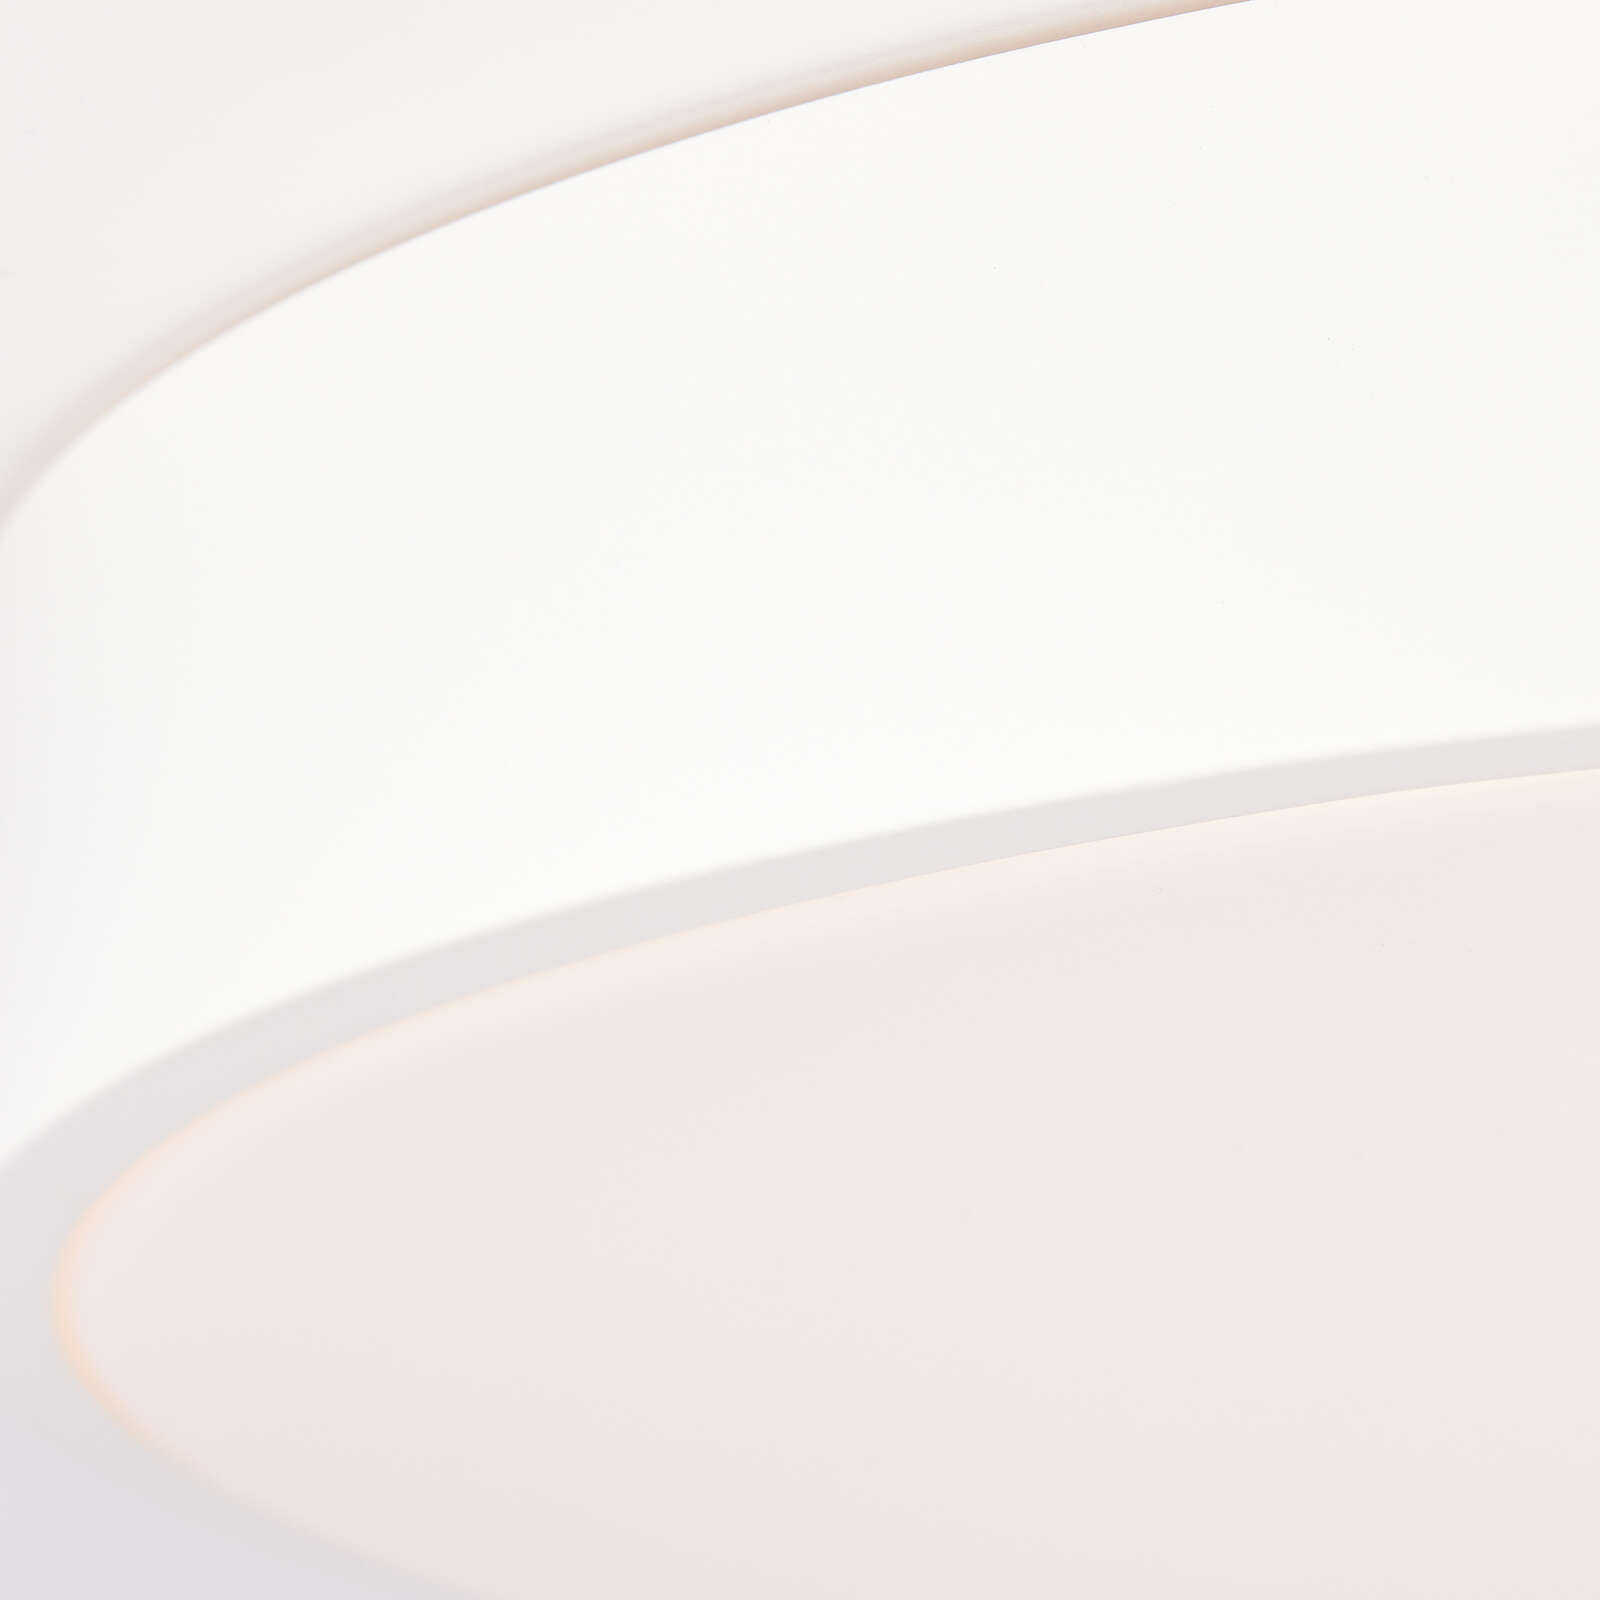             Kunststof wand- en plafondlamp - Niklas 7 - Wit
        